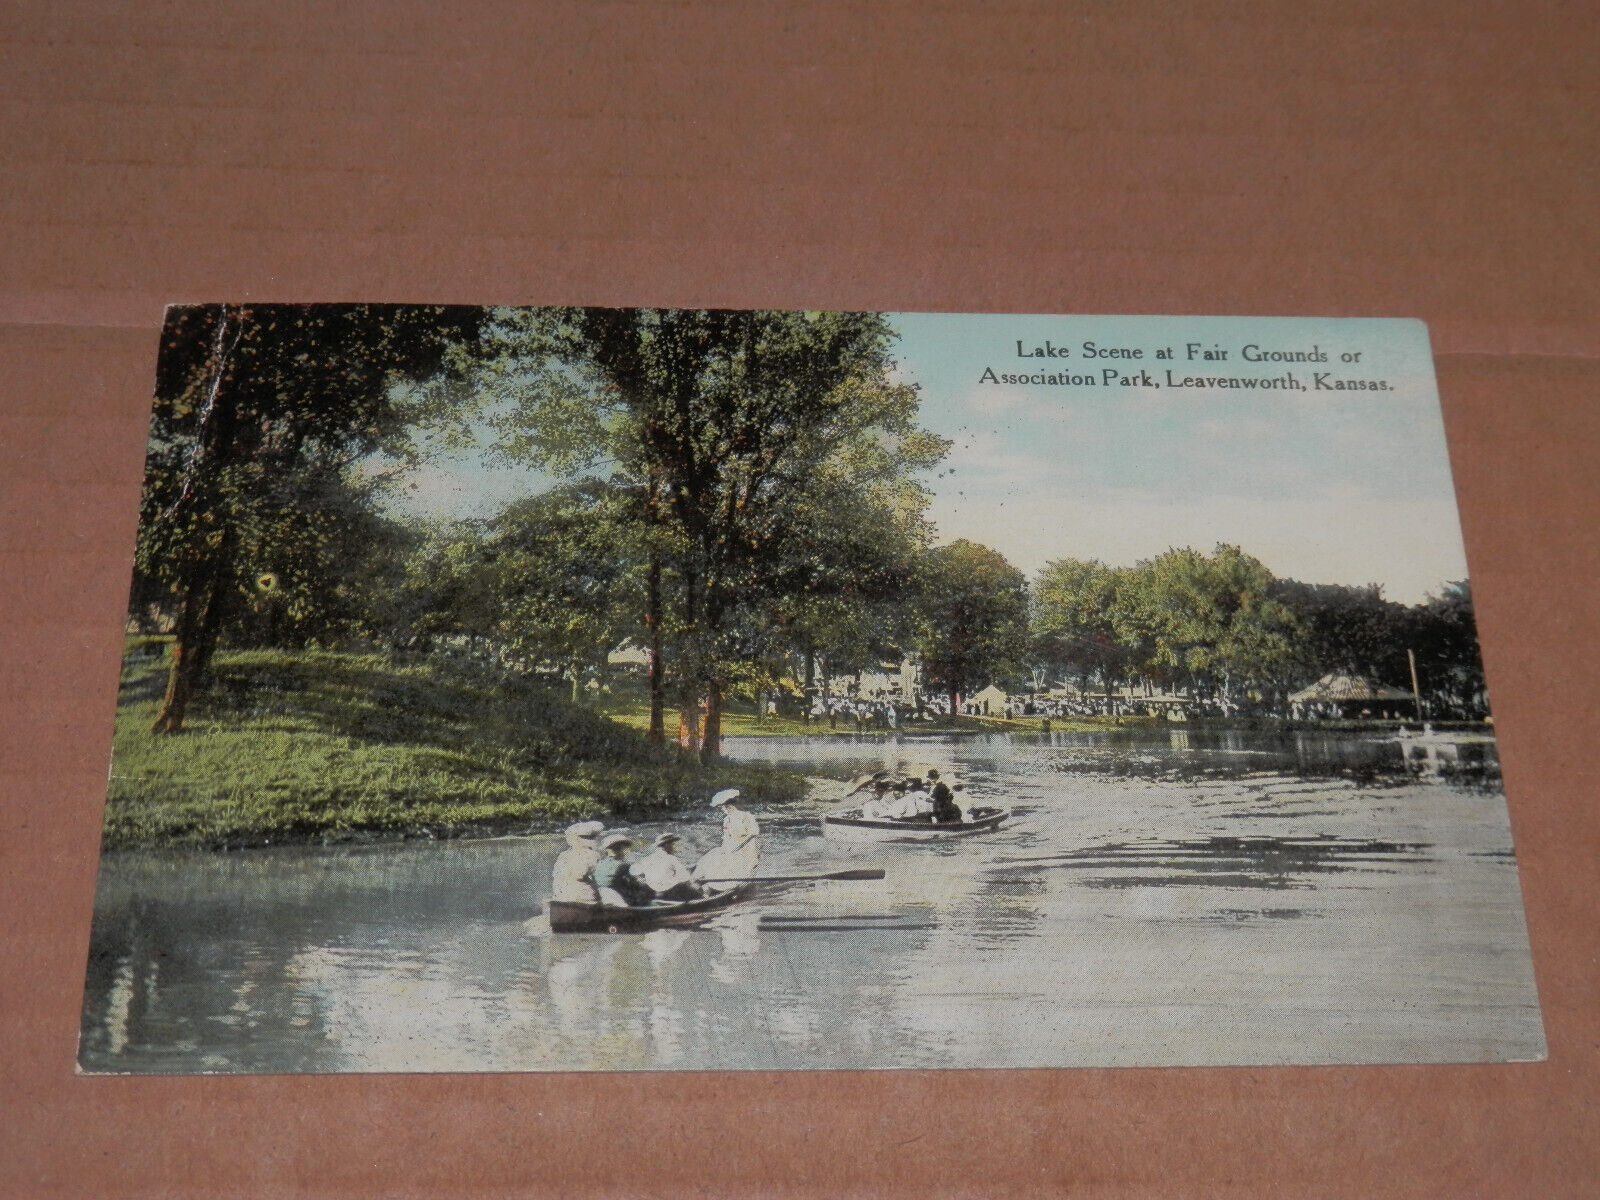 LEAVENWORTH KANSAS - 1911 POSTCARD - LAKE SCENE at FAIRGROUNDS  ASSOCIATION PARK